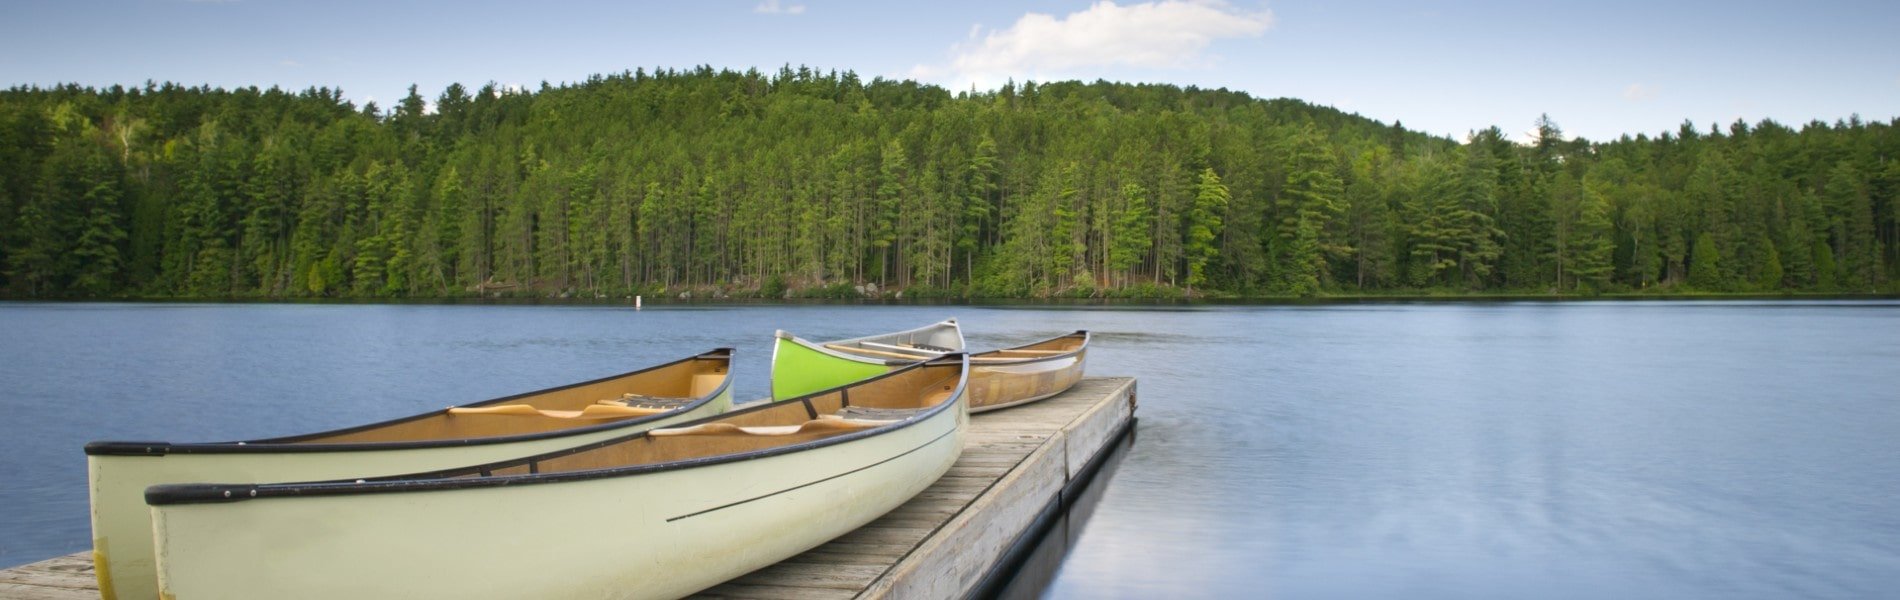 canoes on a dock overlooking a muskoka lake